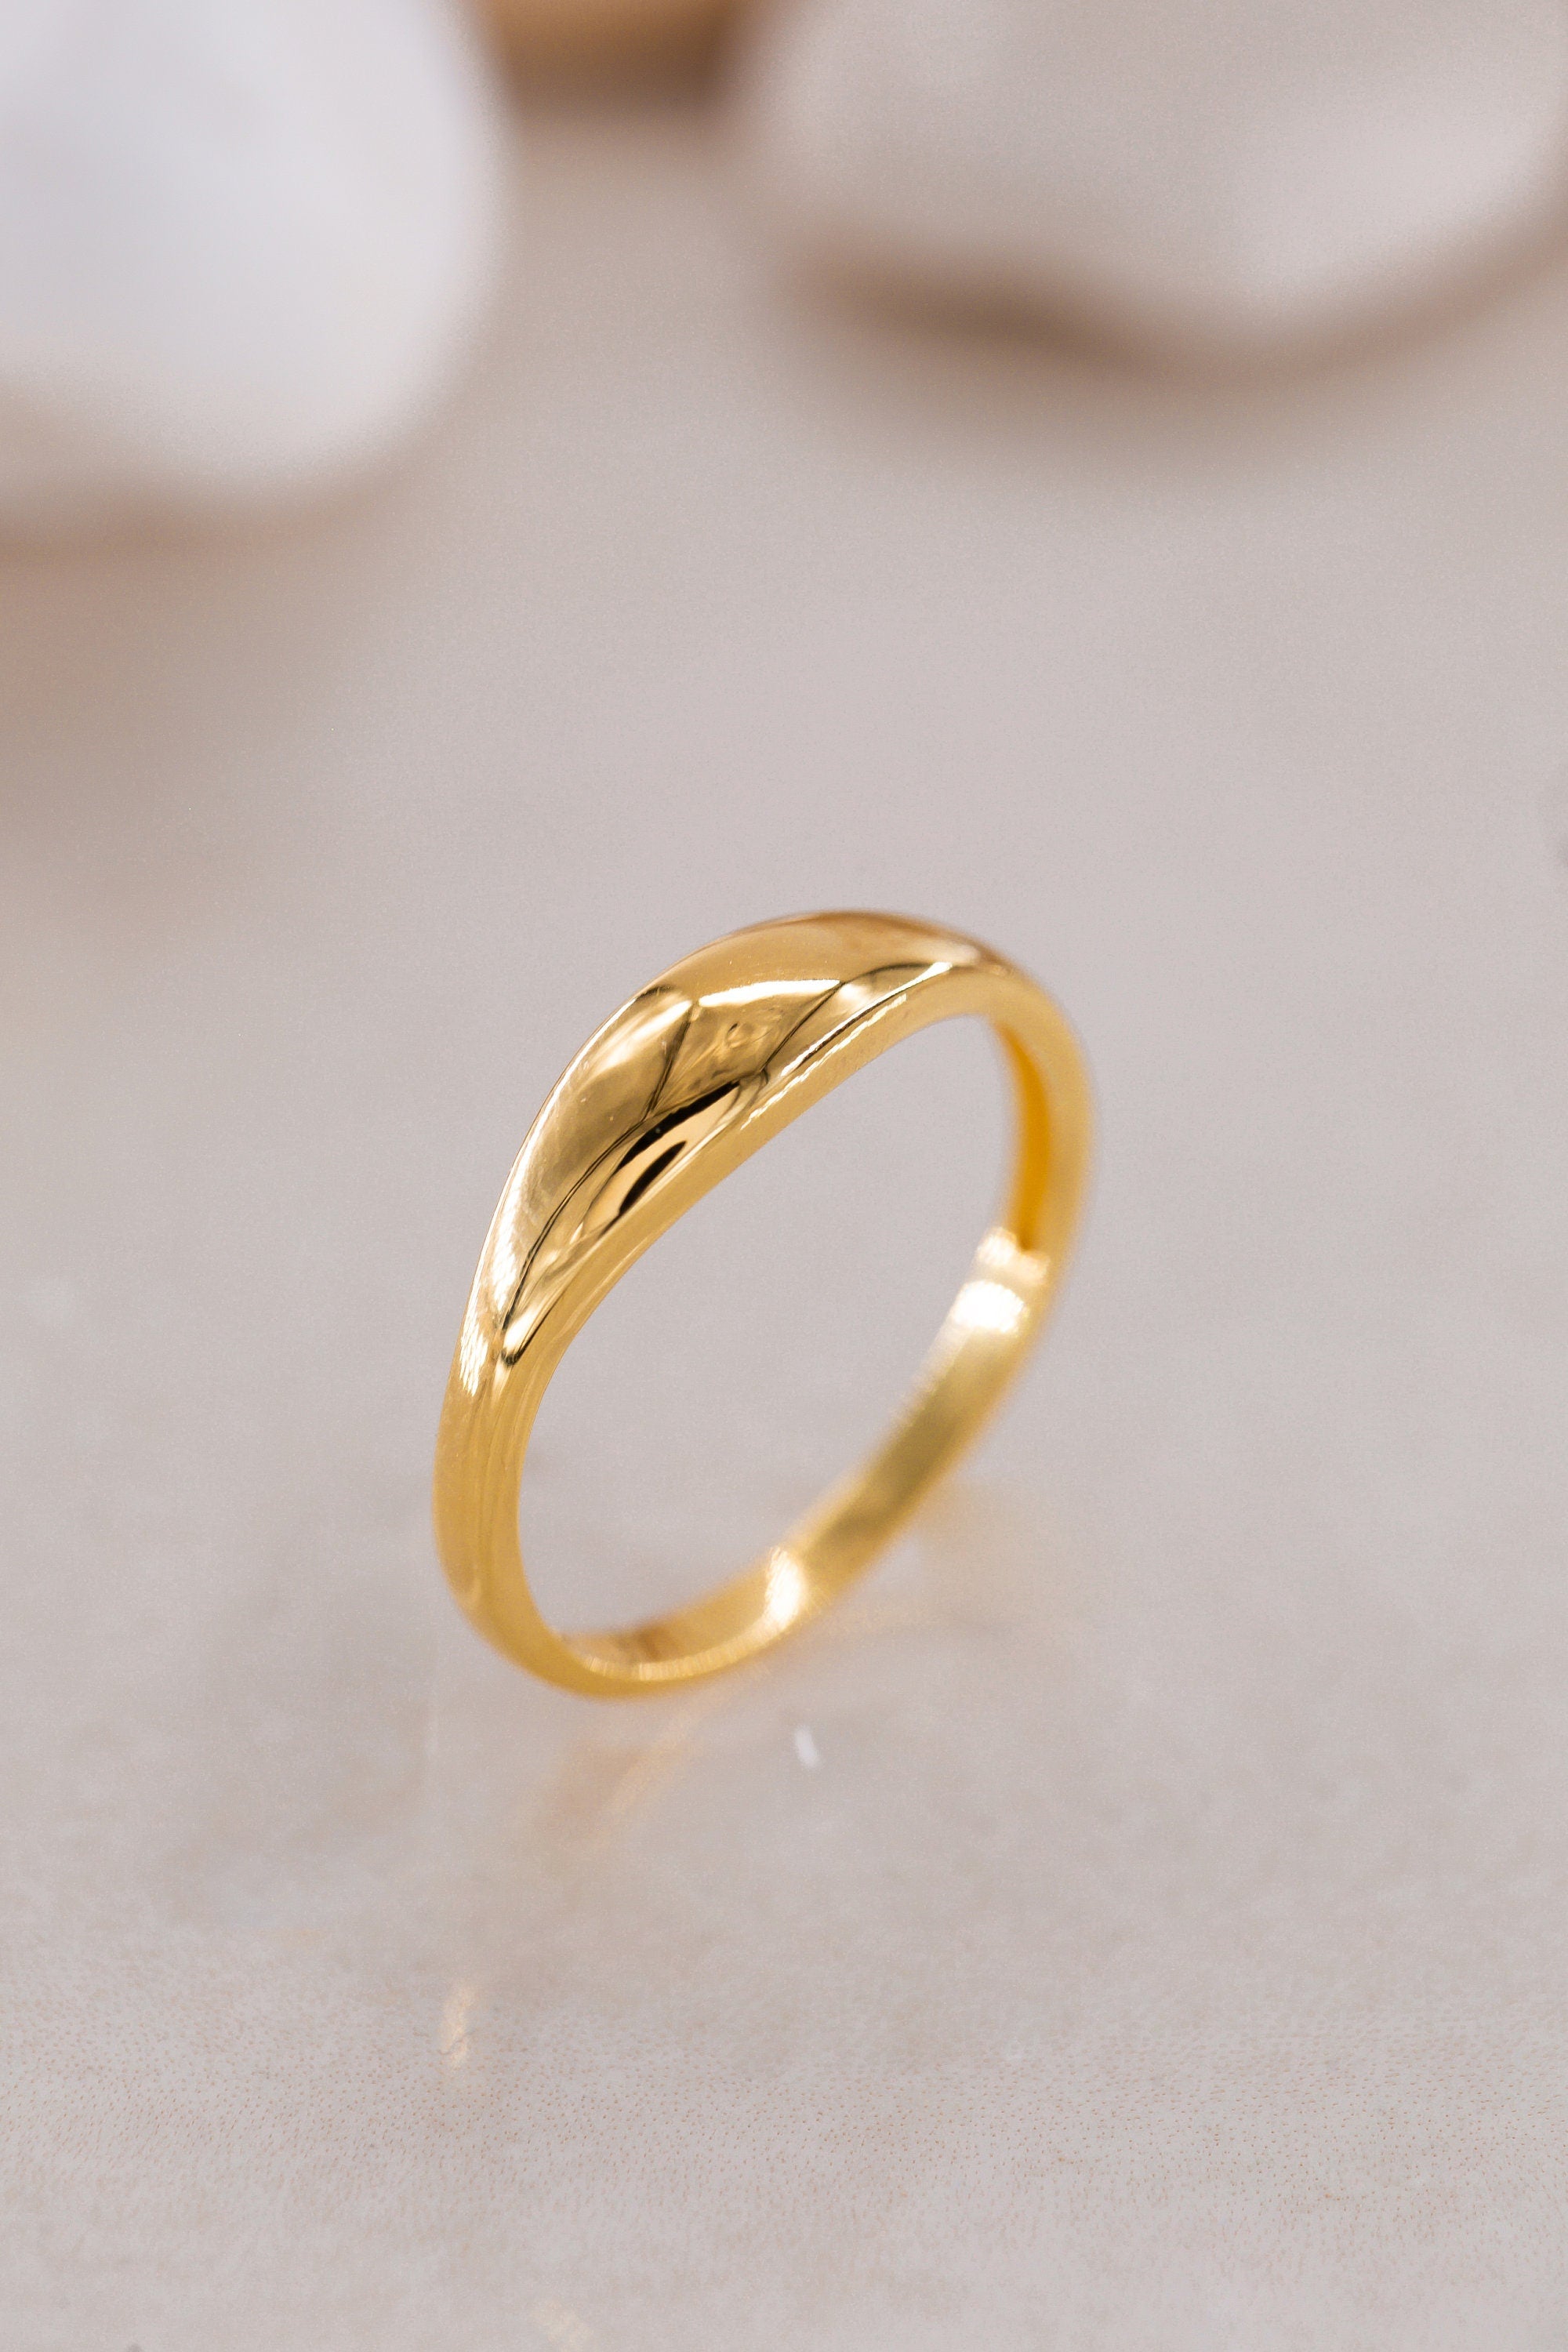 14K Golden Wedding Ring - Golden Ring - Promise Ring - Engagement - Mother's Day Gift - Royal Ring - Special Design - Golden Gift Ring